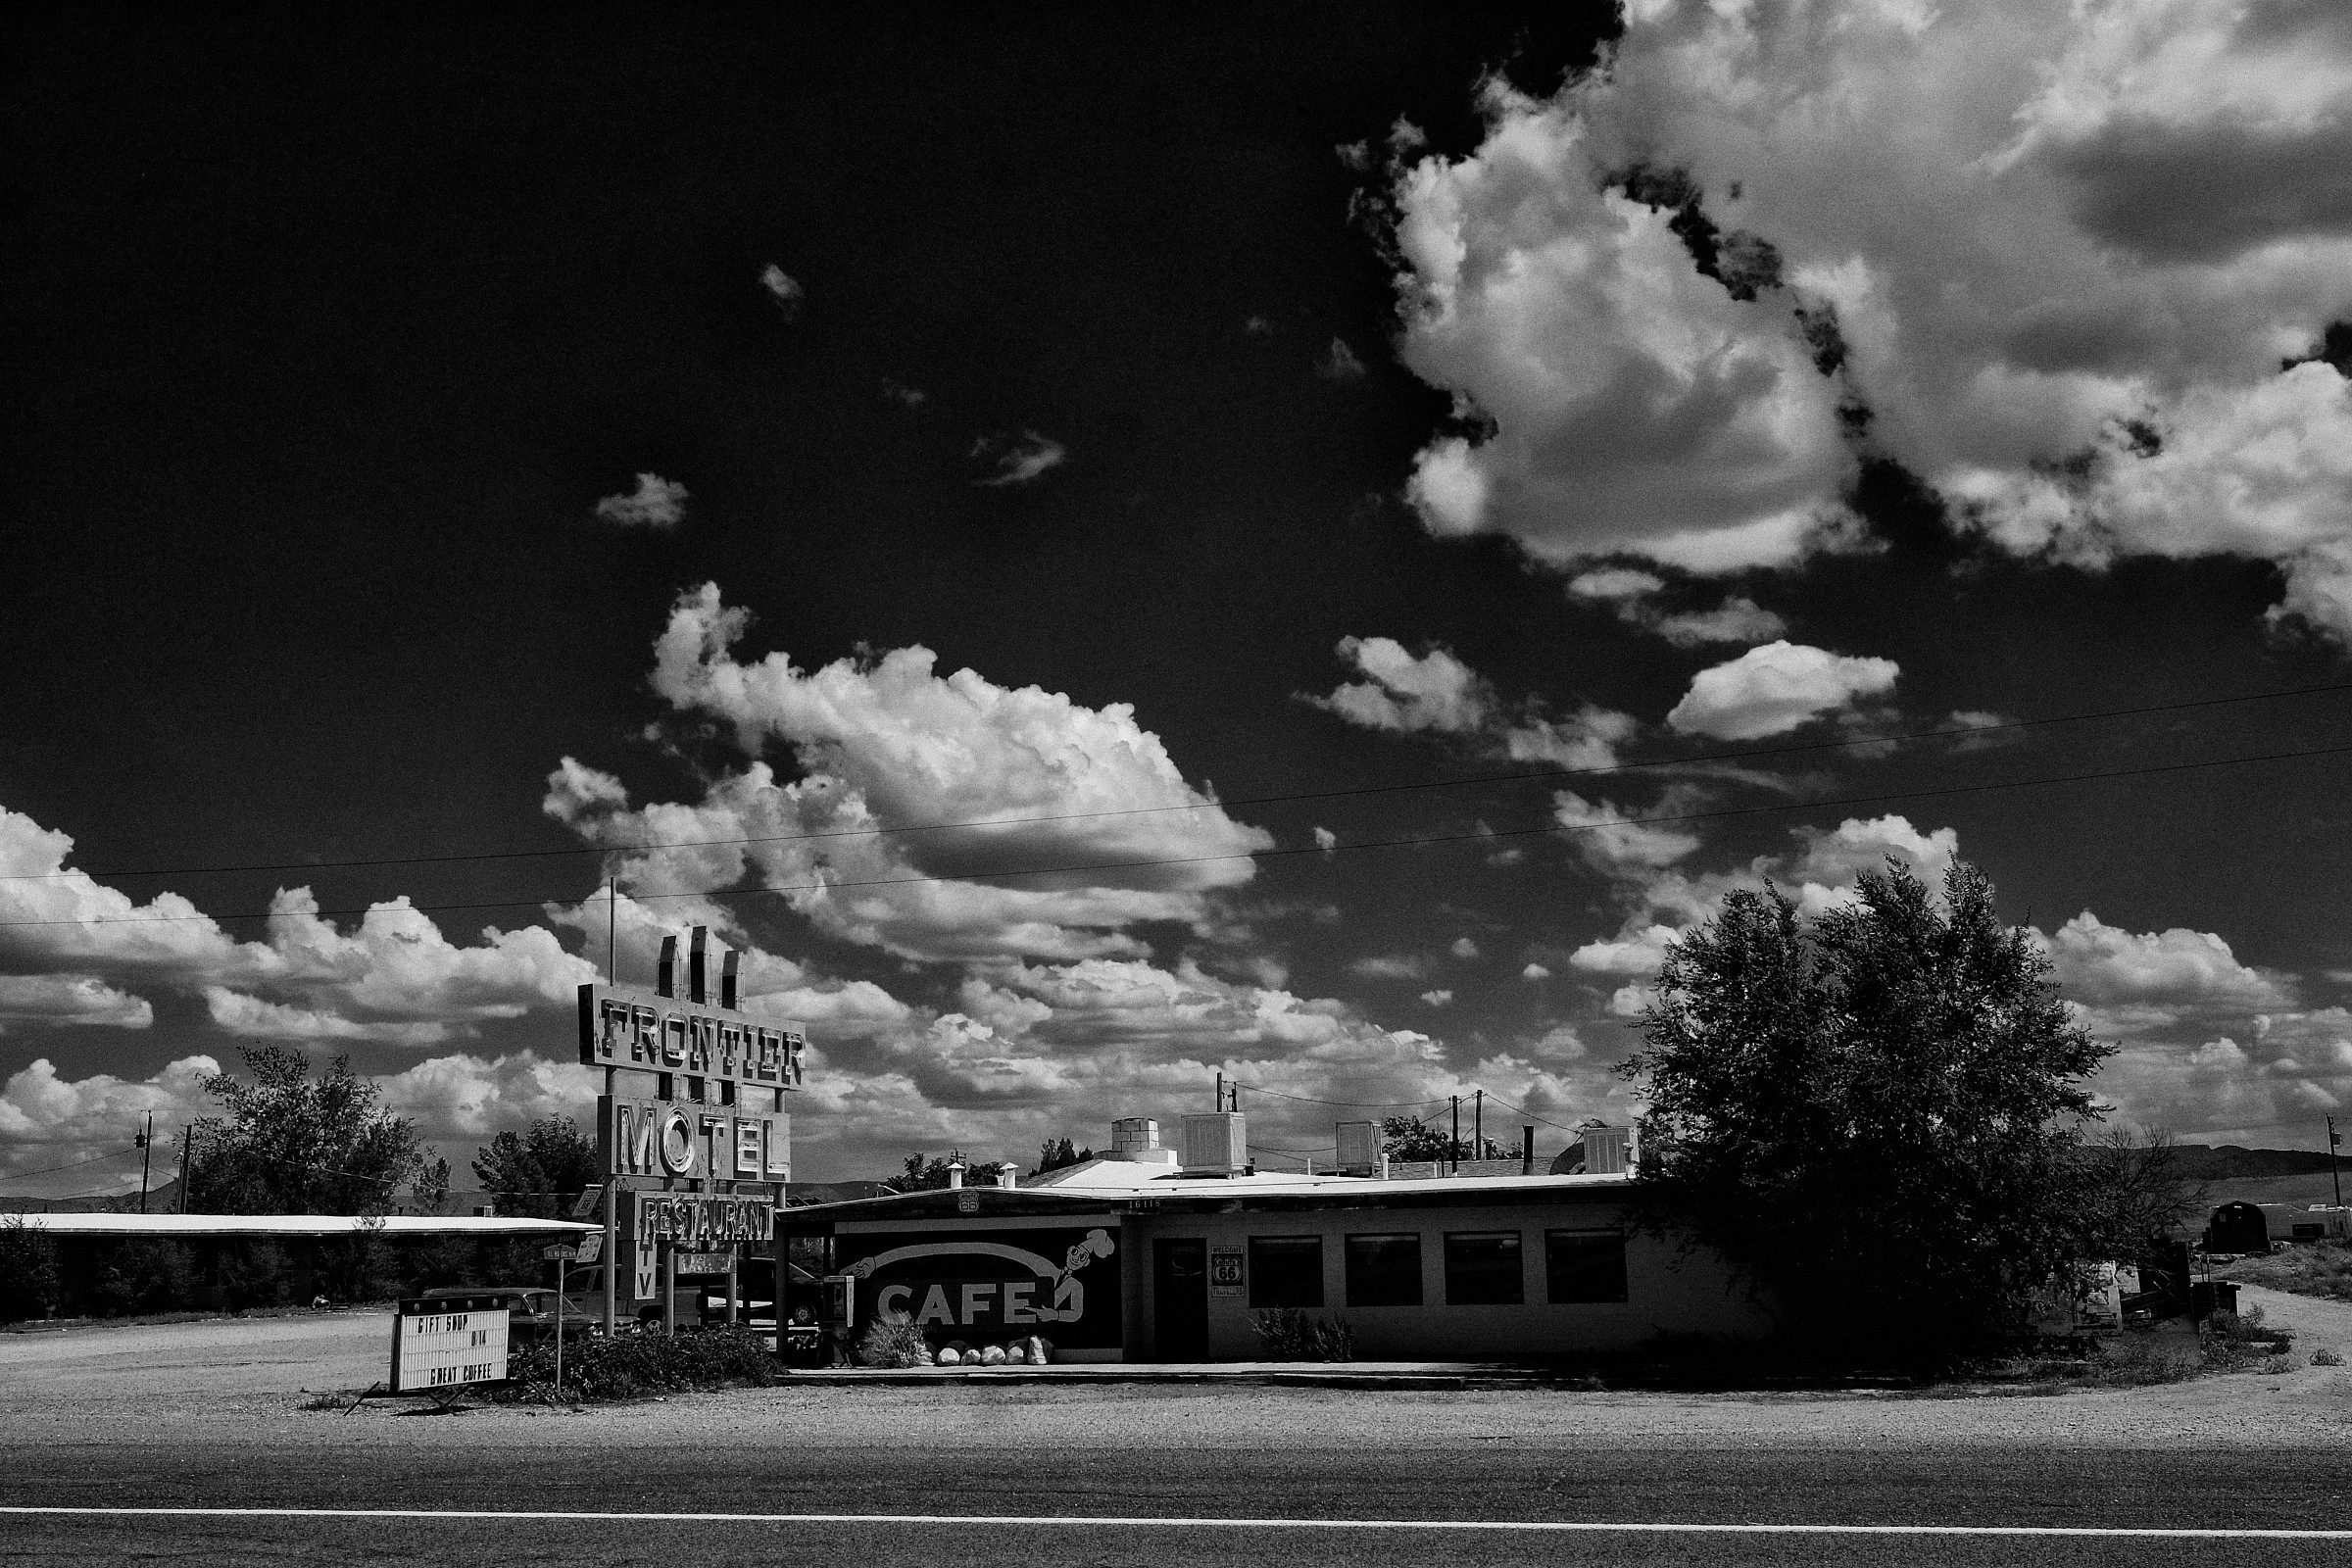 Motel Frontier, Arizona 2014 - Route 66...